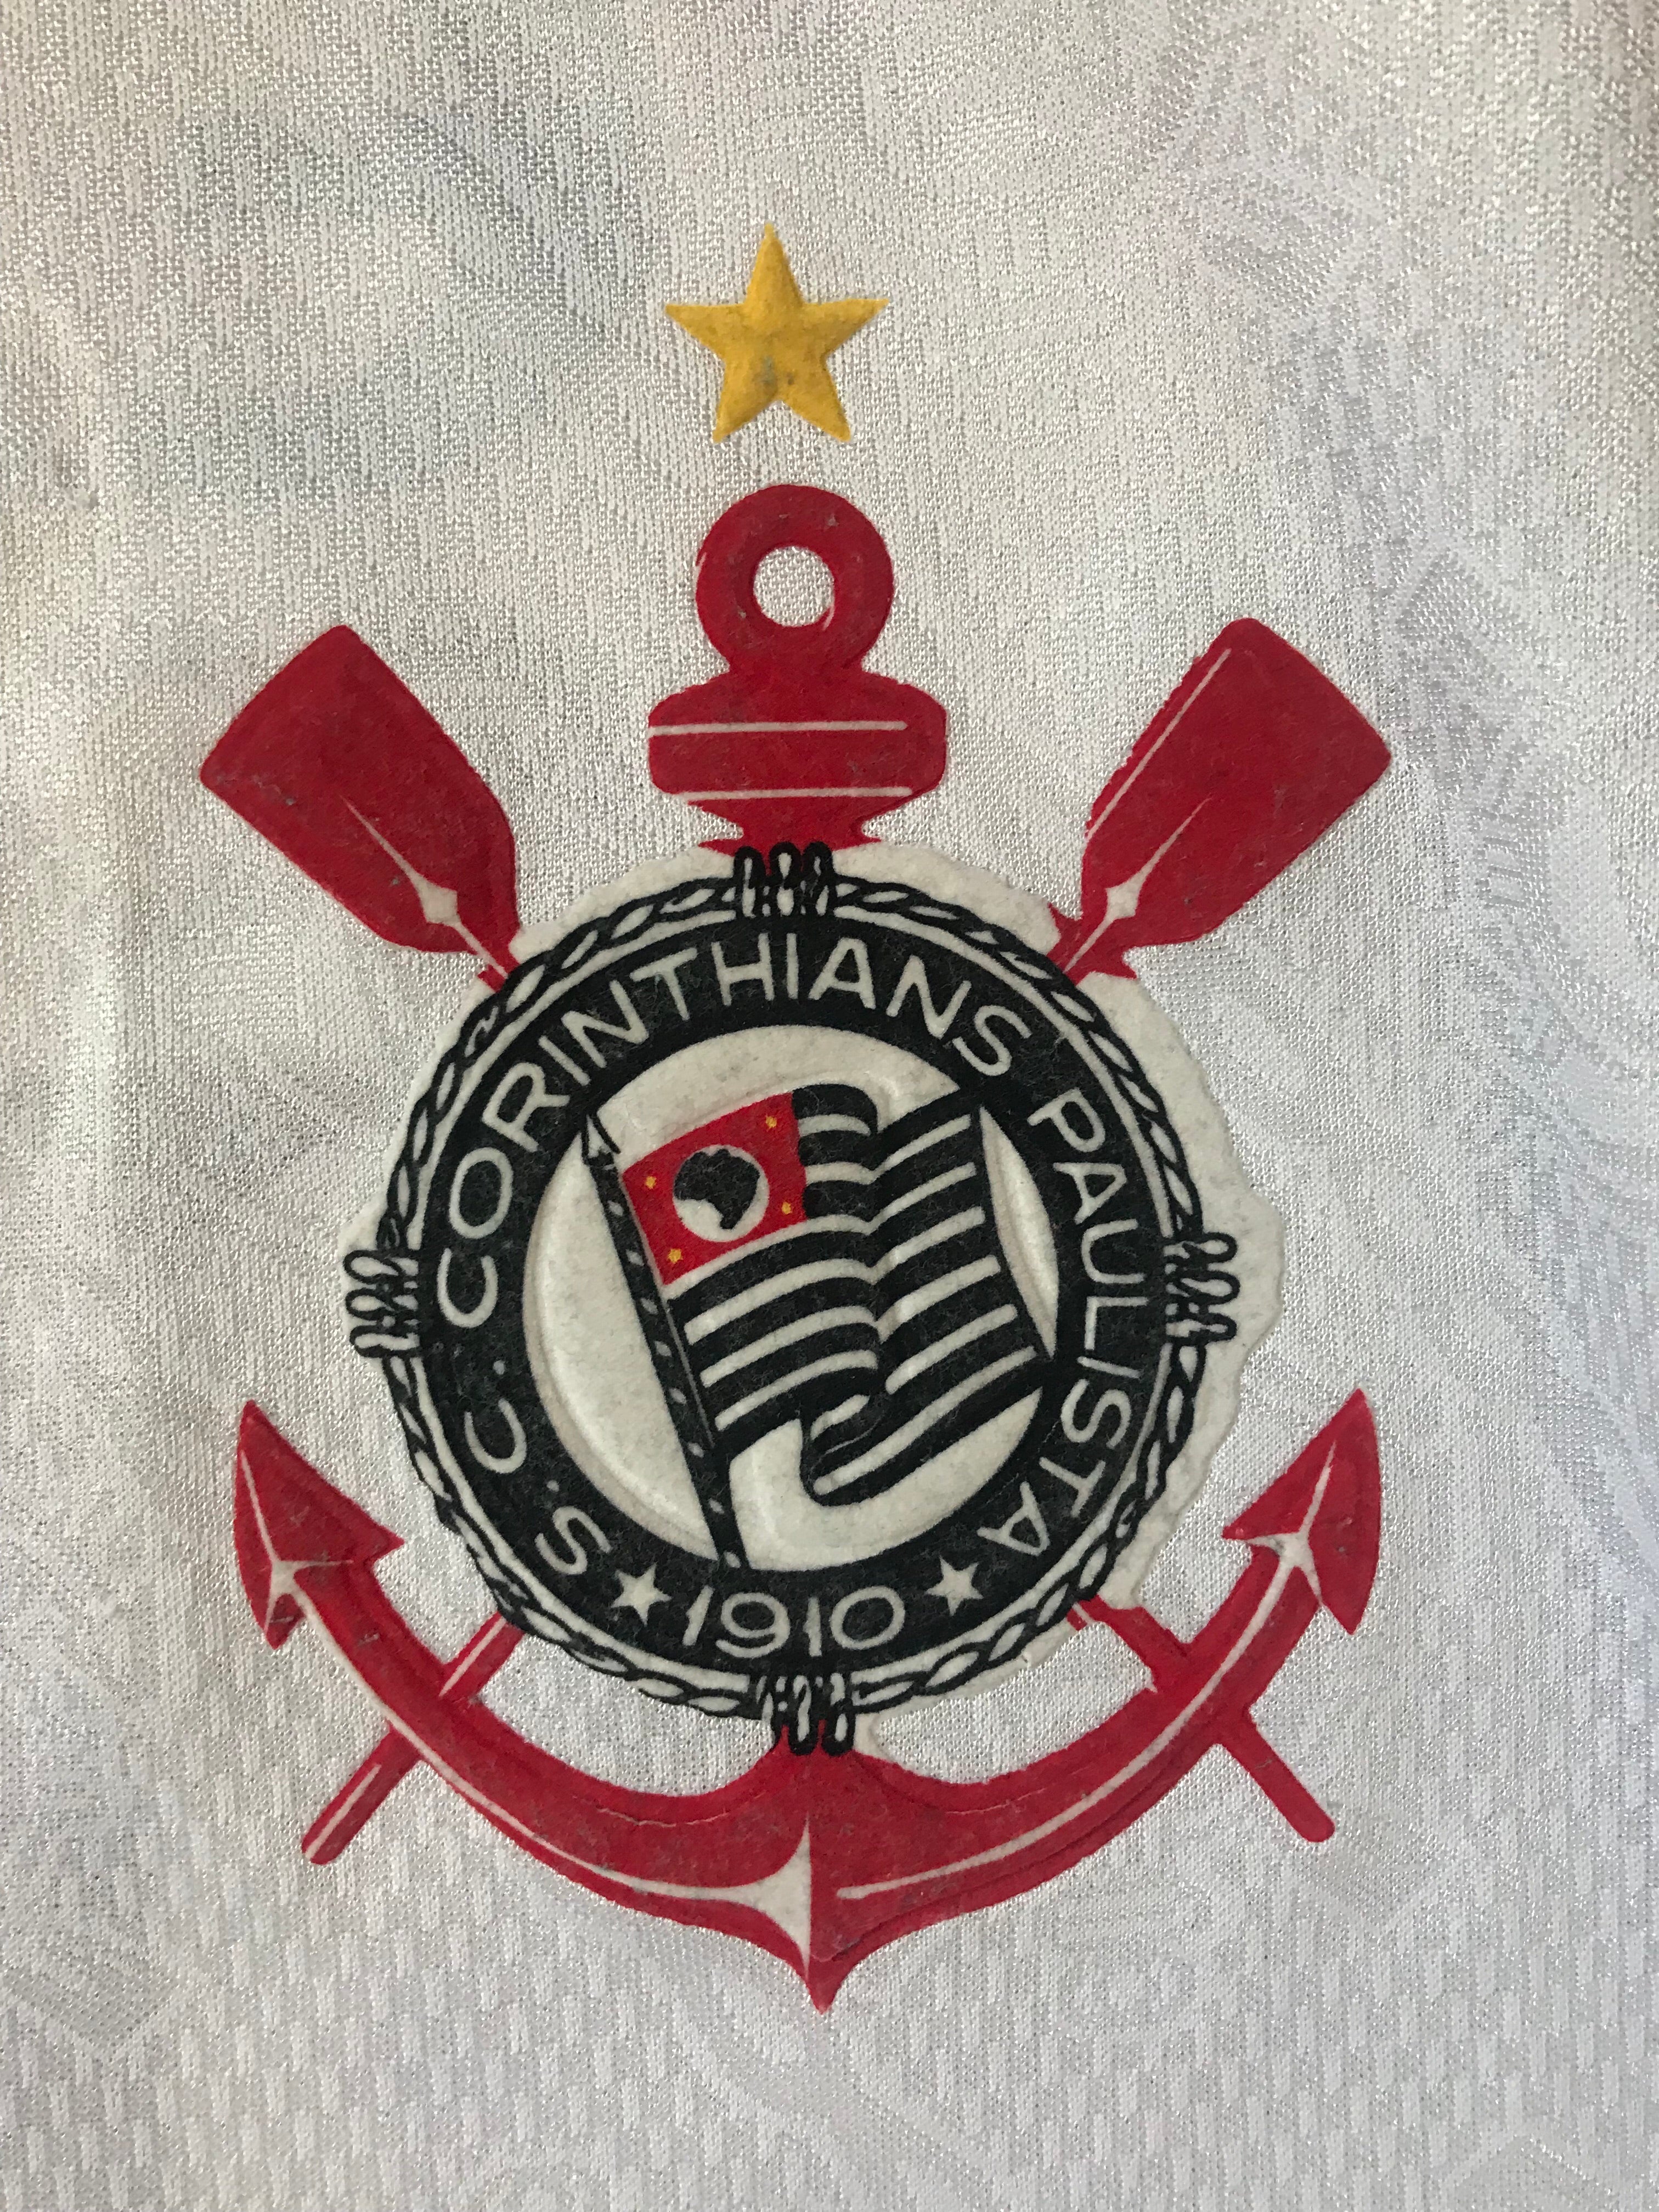 1998 Corinthians Home Shirt #10 (Edilson) (XL) 9/10